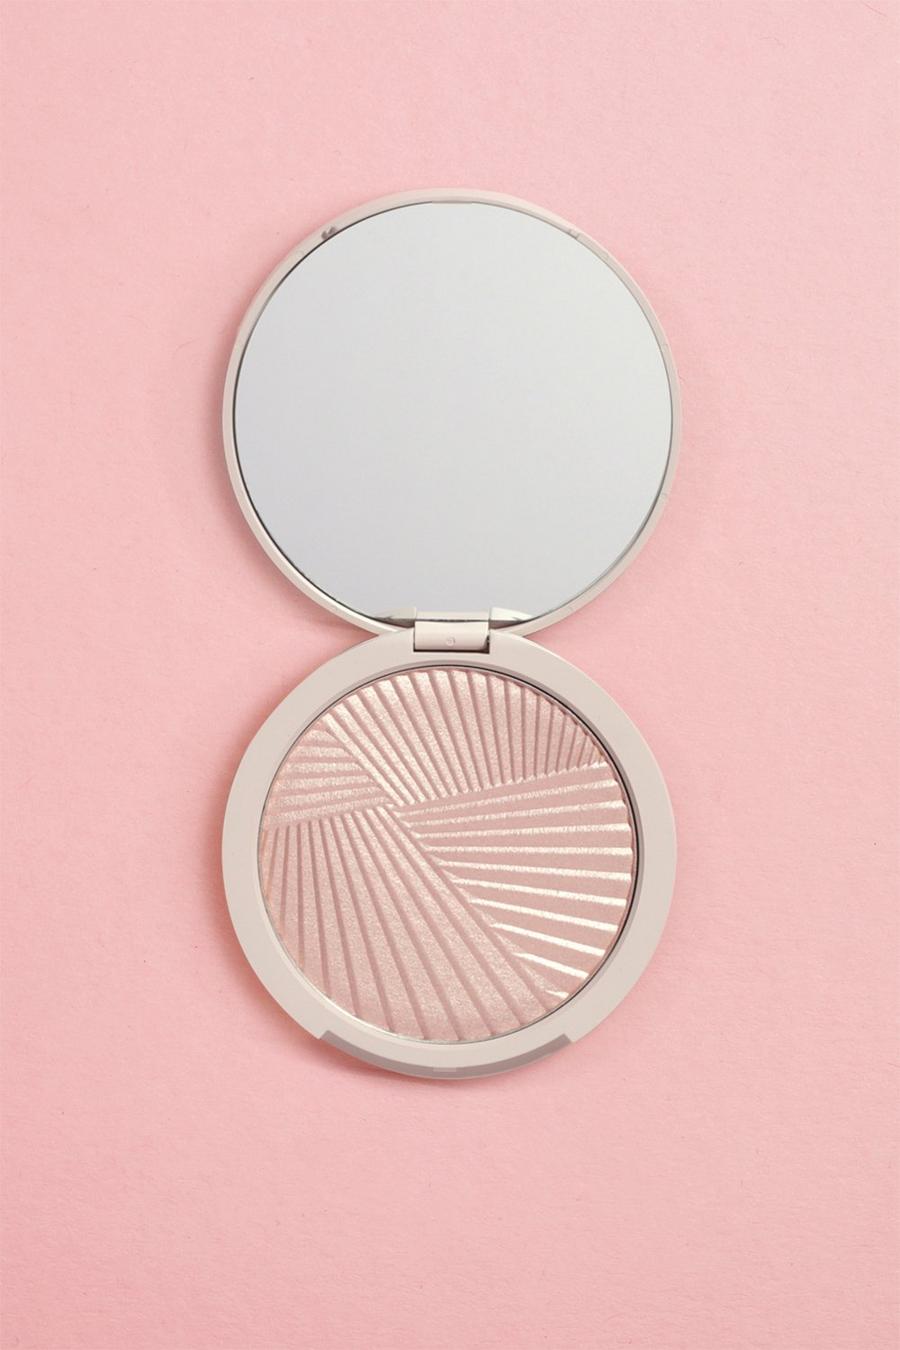 Boohoo Beauty Face & Body Highlighter & Puder mit Spiegel, Pink